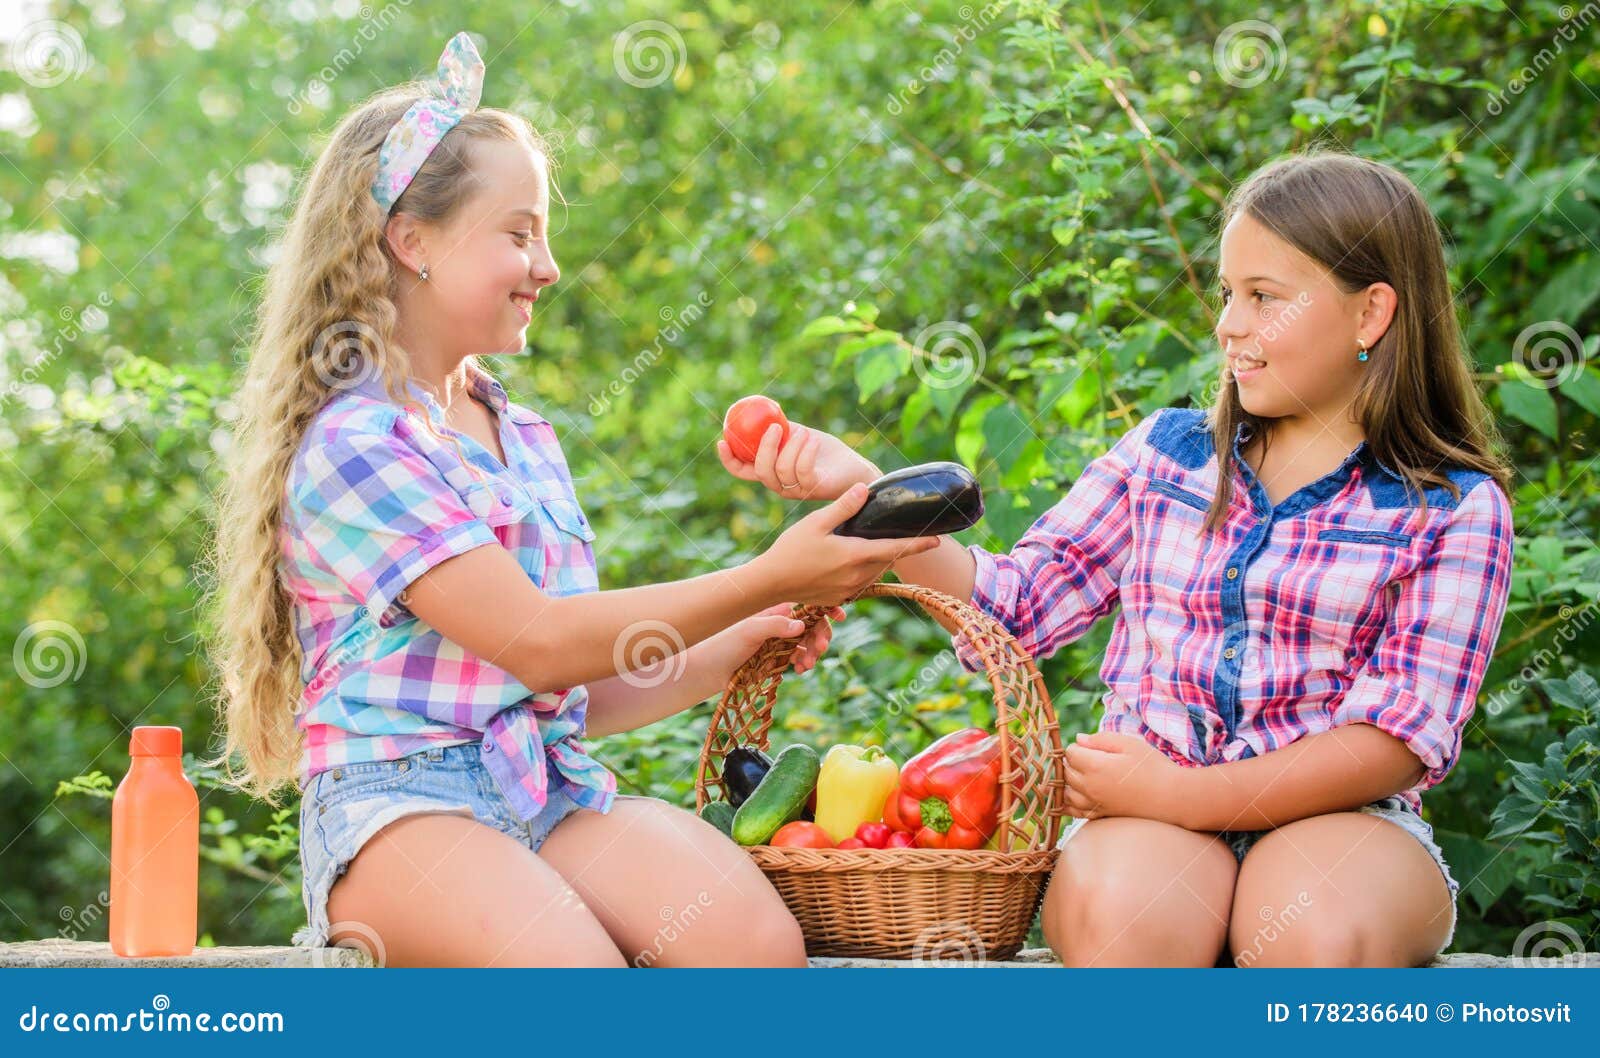 Successful Purchase. Kids Vegetable Juice. Healthy Food is Happy Life